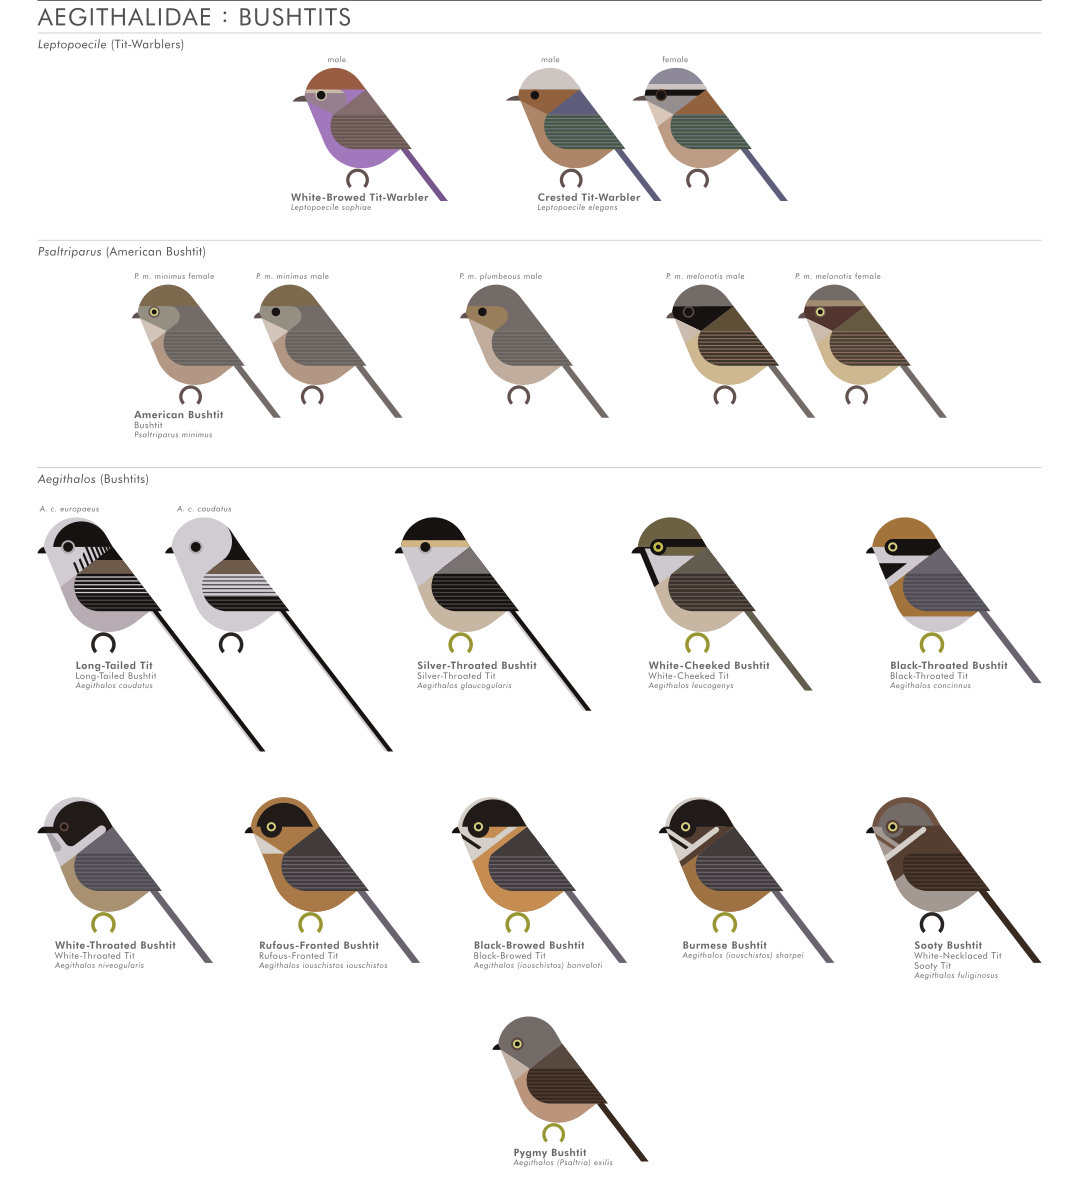 scott partridge - AVE - avian vector encyclopedia - bushtits - bird vector art